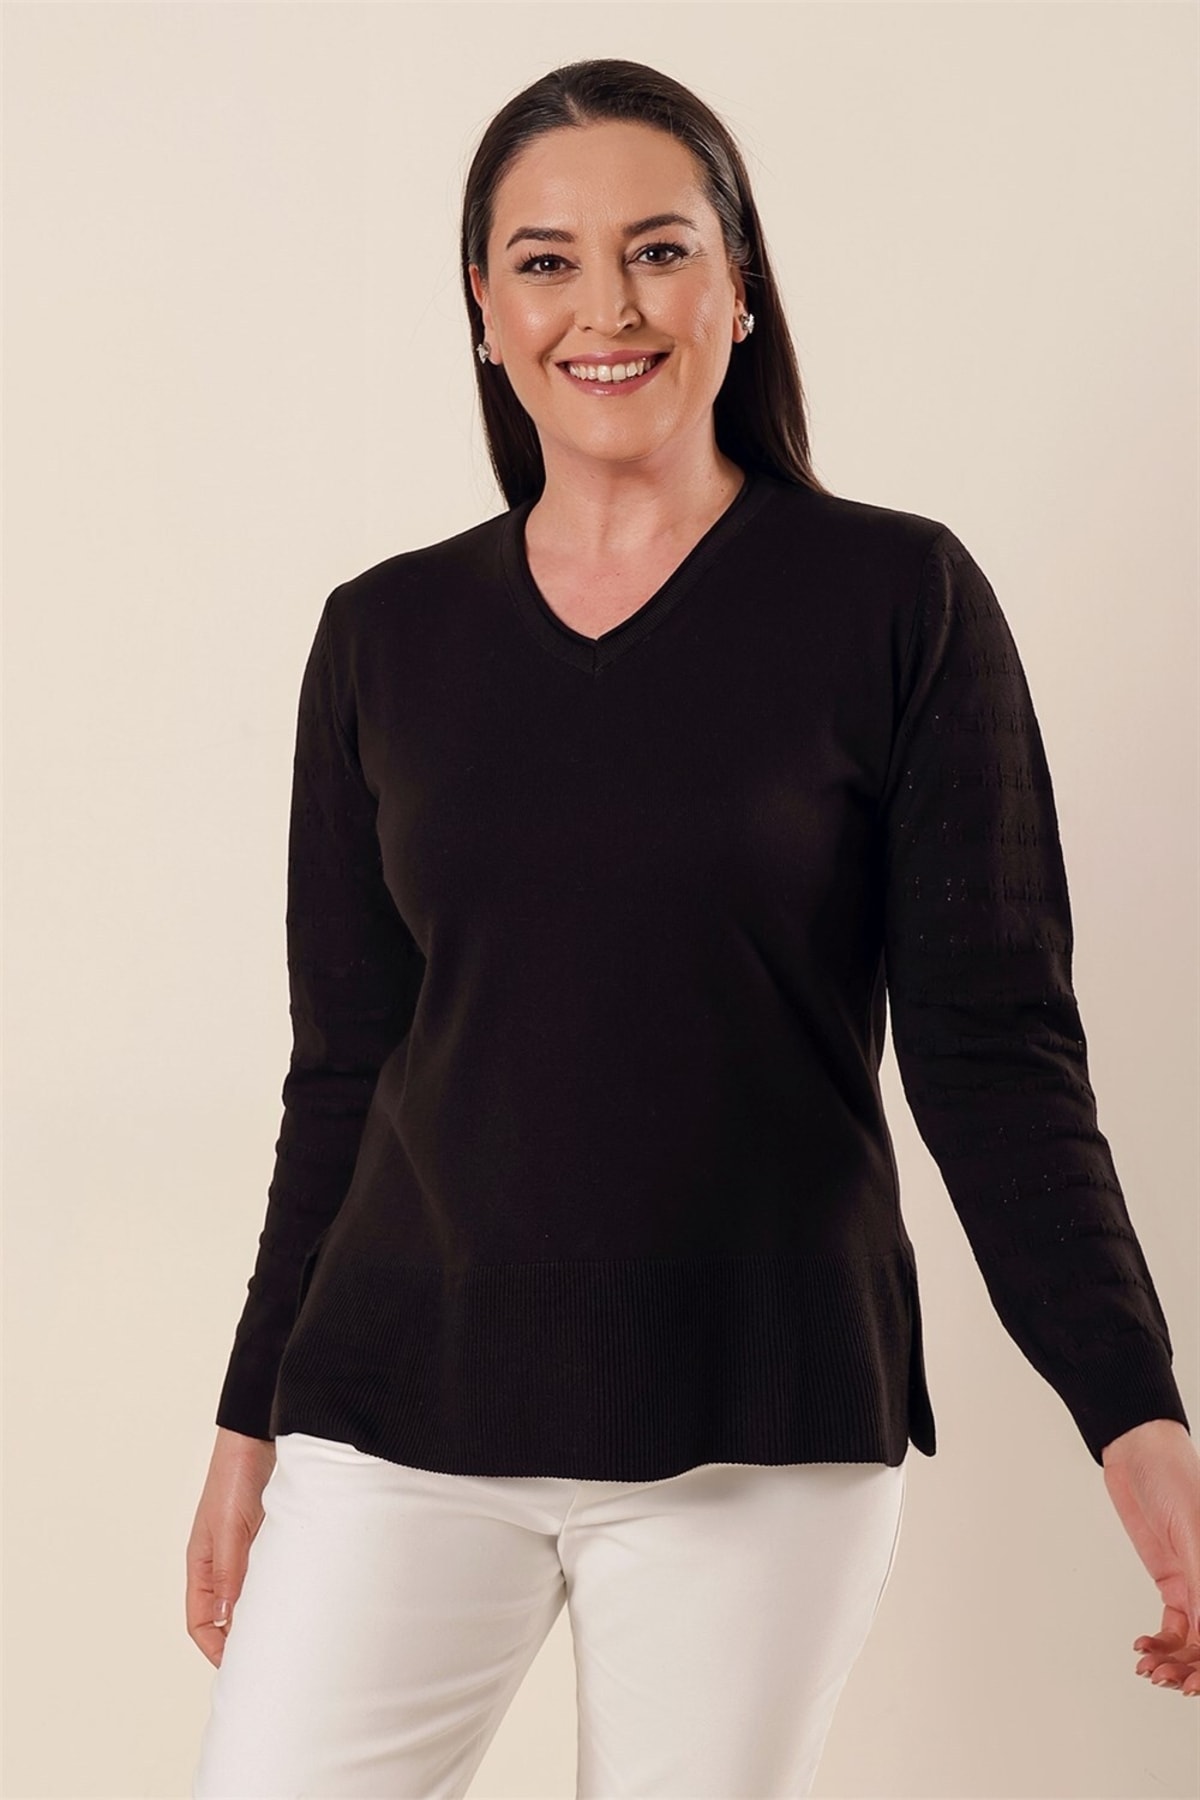 Levně By Saygı V-Neck Sleeve Vzorovaný akrylový svetr nadměrné velikosti s bočními rozparky černý